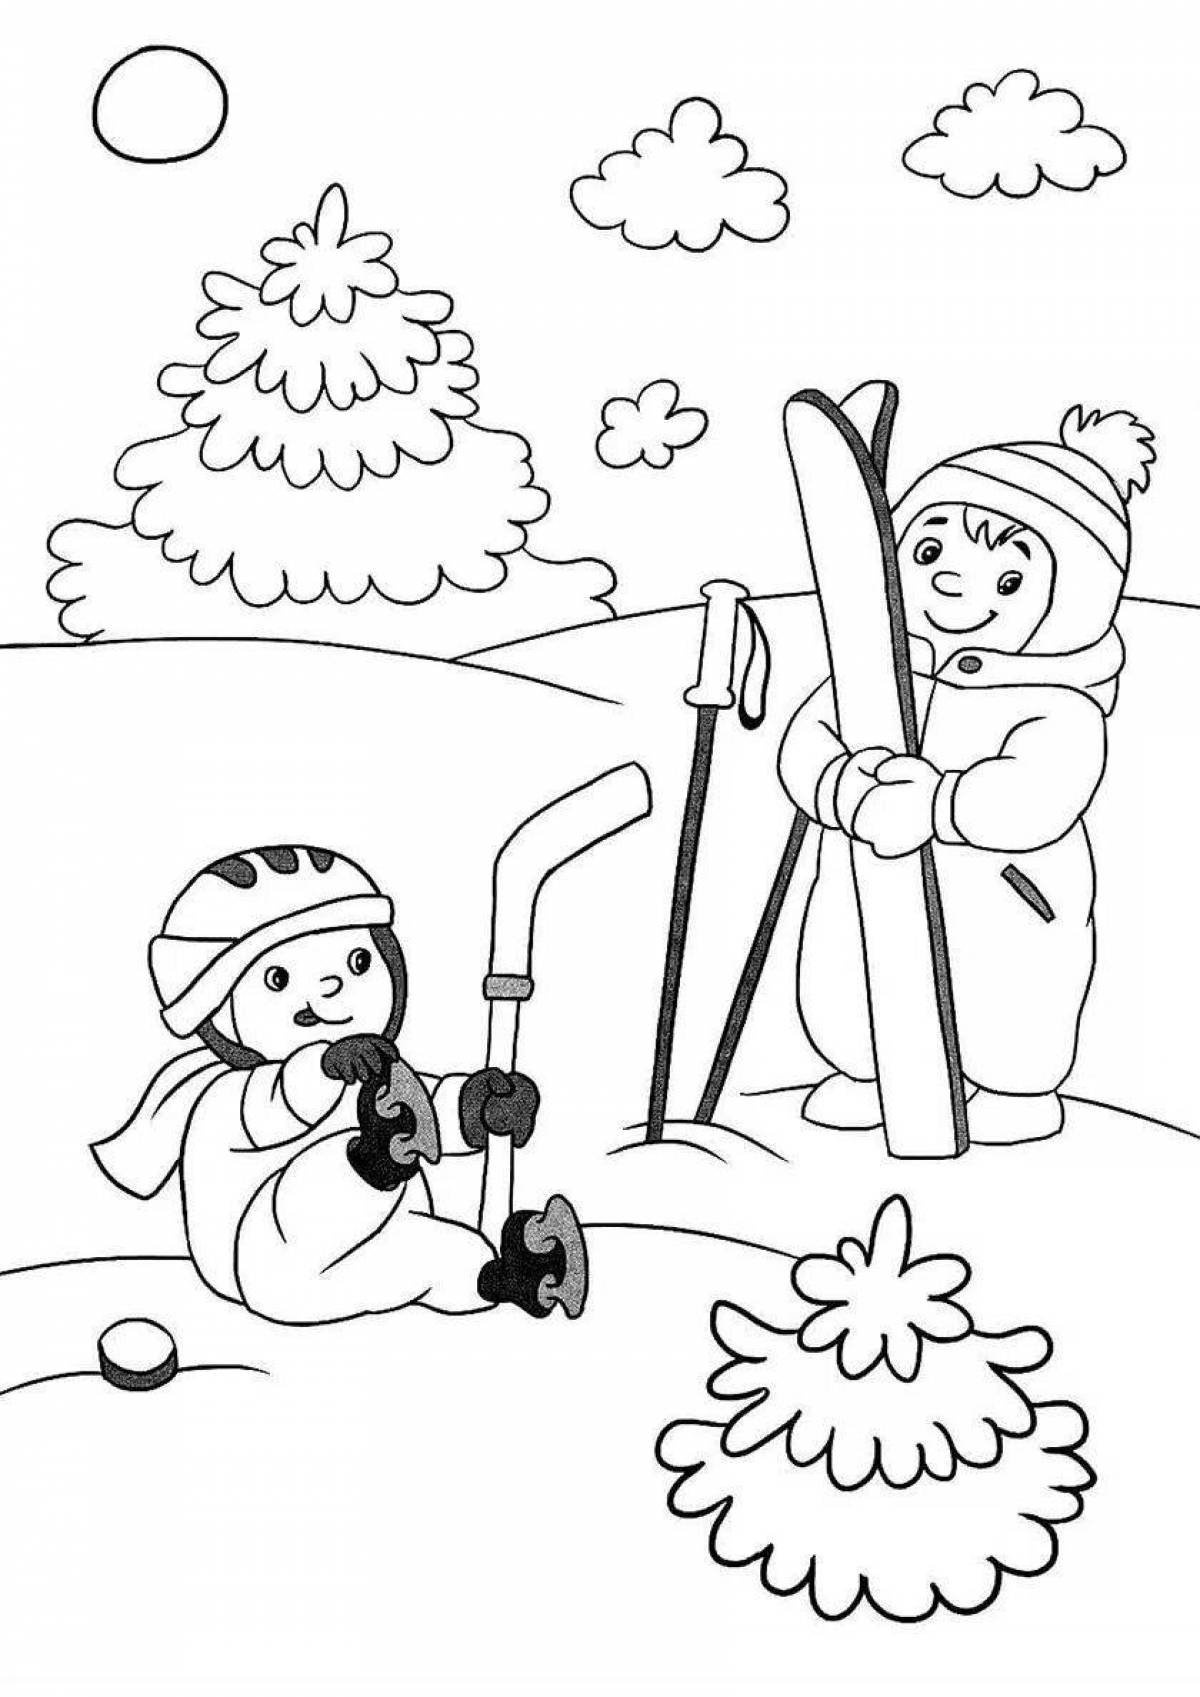 Joyful coloring picture of winter fun